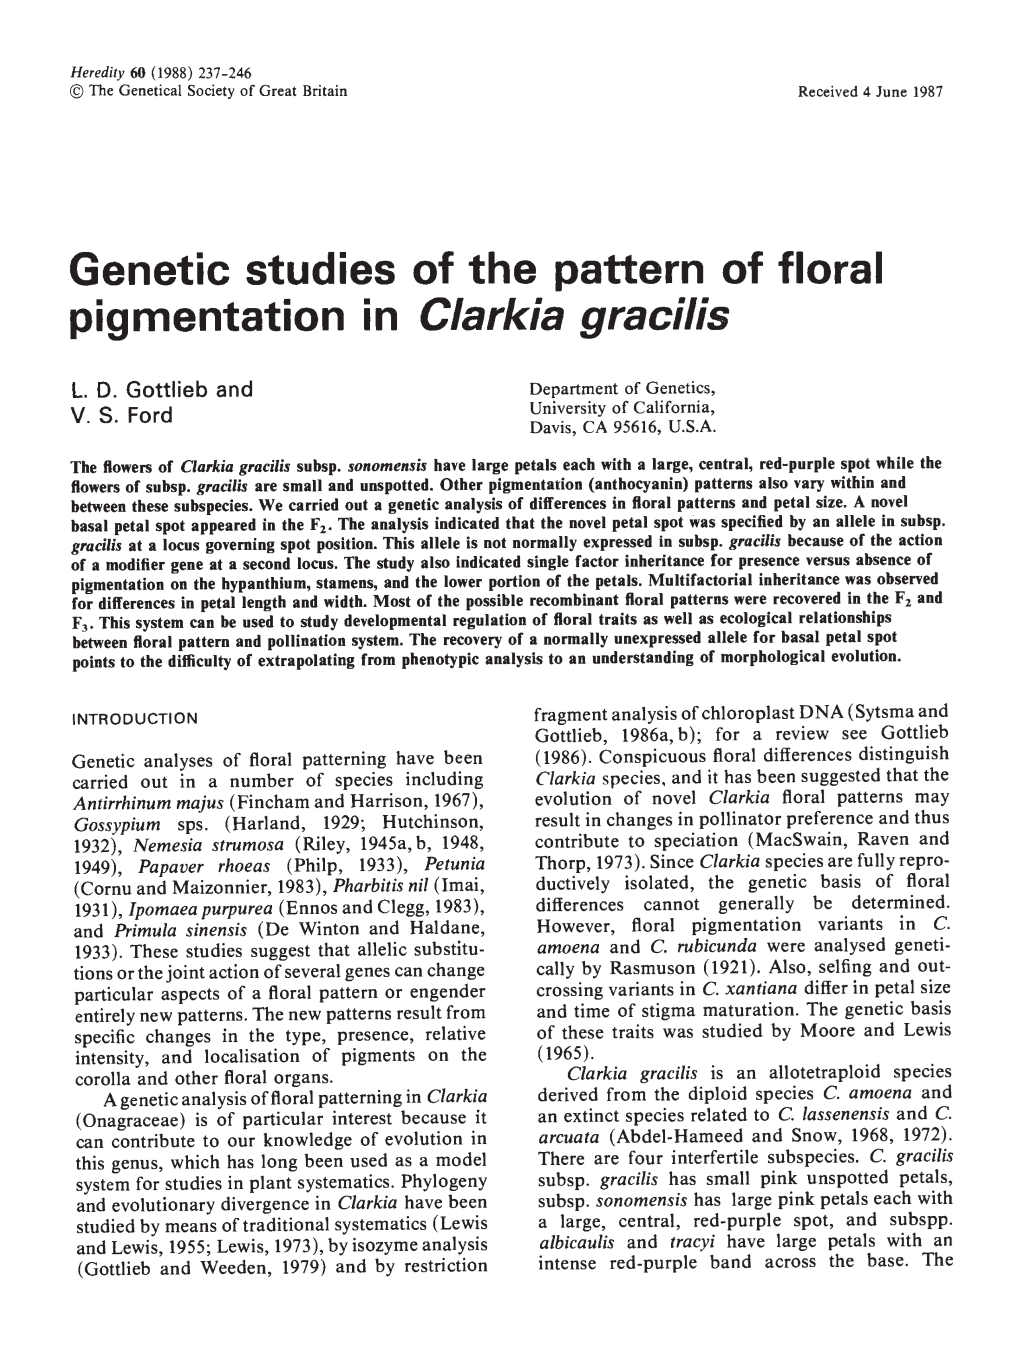 Genetic Studies of the Pattern of Floral Pigmentation in Clarkia Gracilis